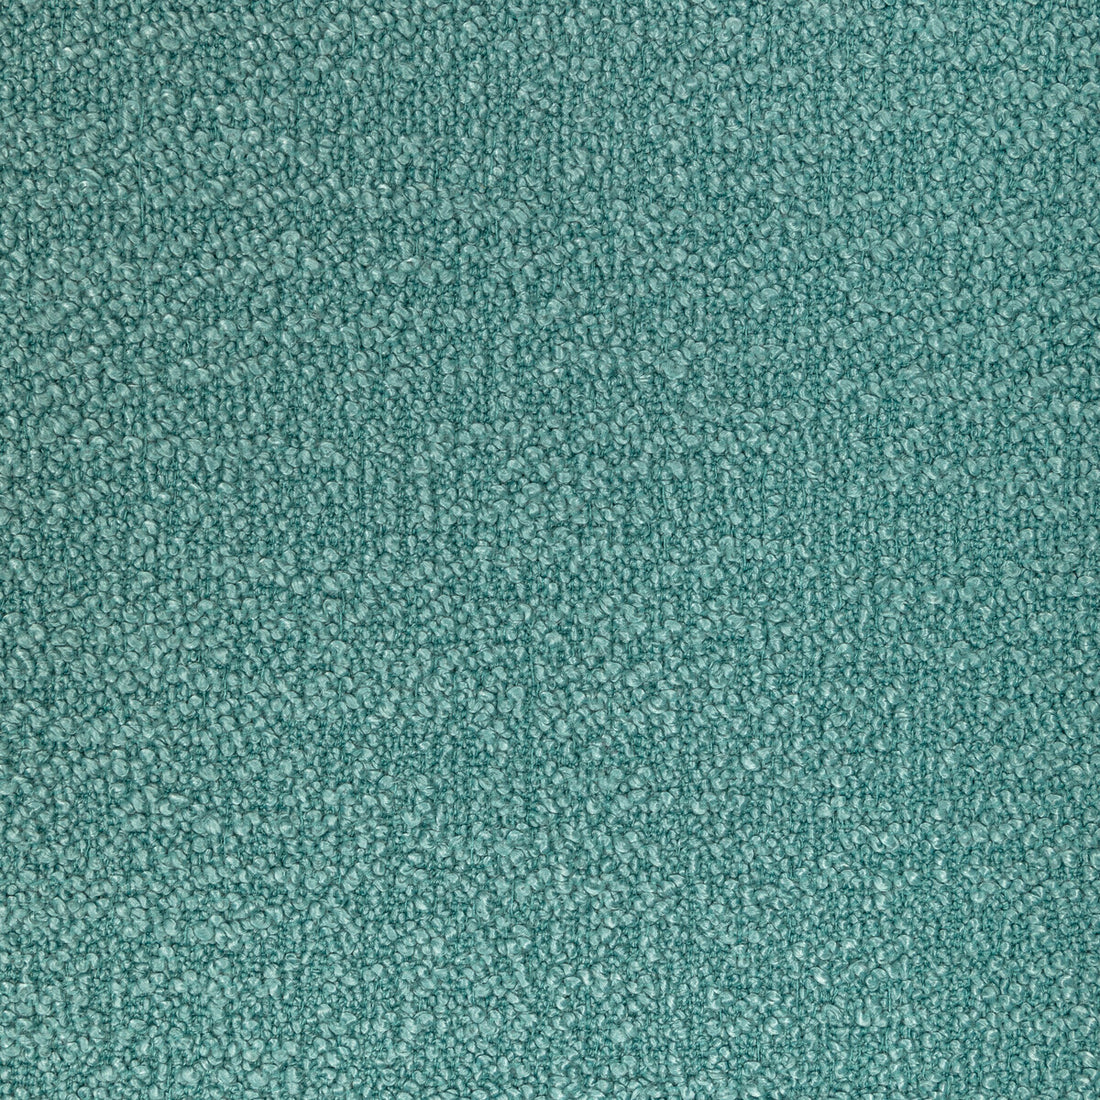 Kravet Smart fabric in 36857-13 color - pattern 36857.13.0 - by Kravet Smart in the Performance Kravetarmor collection